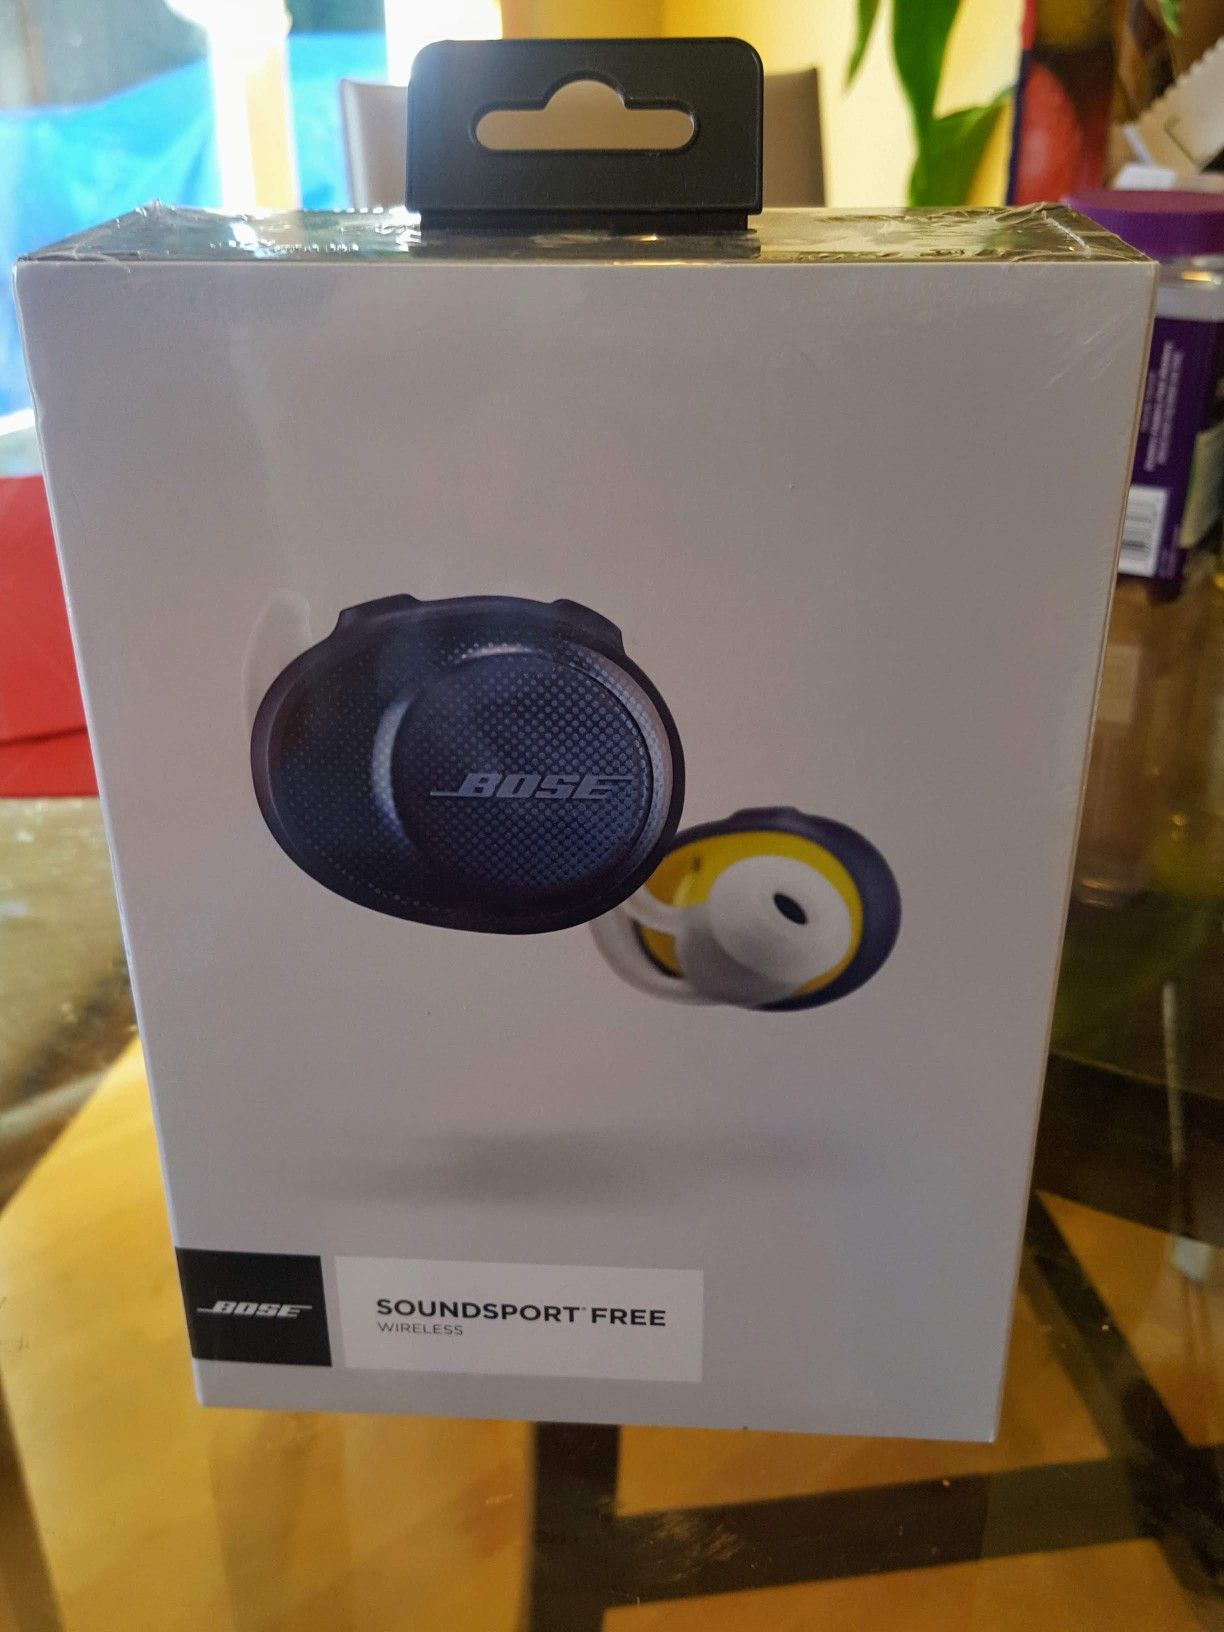 Brand new soundsport free wireless headphones